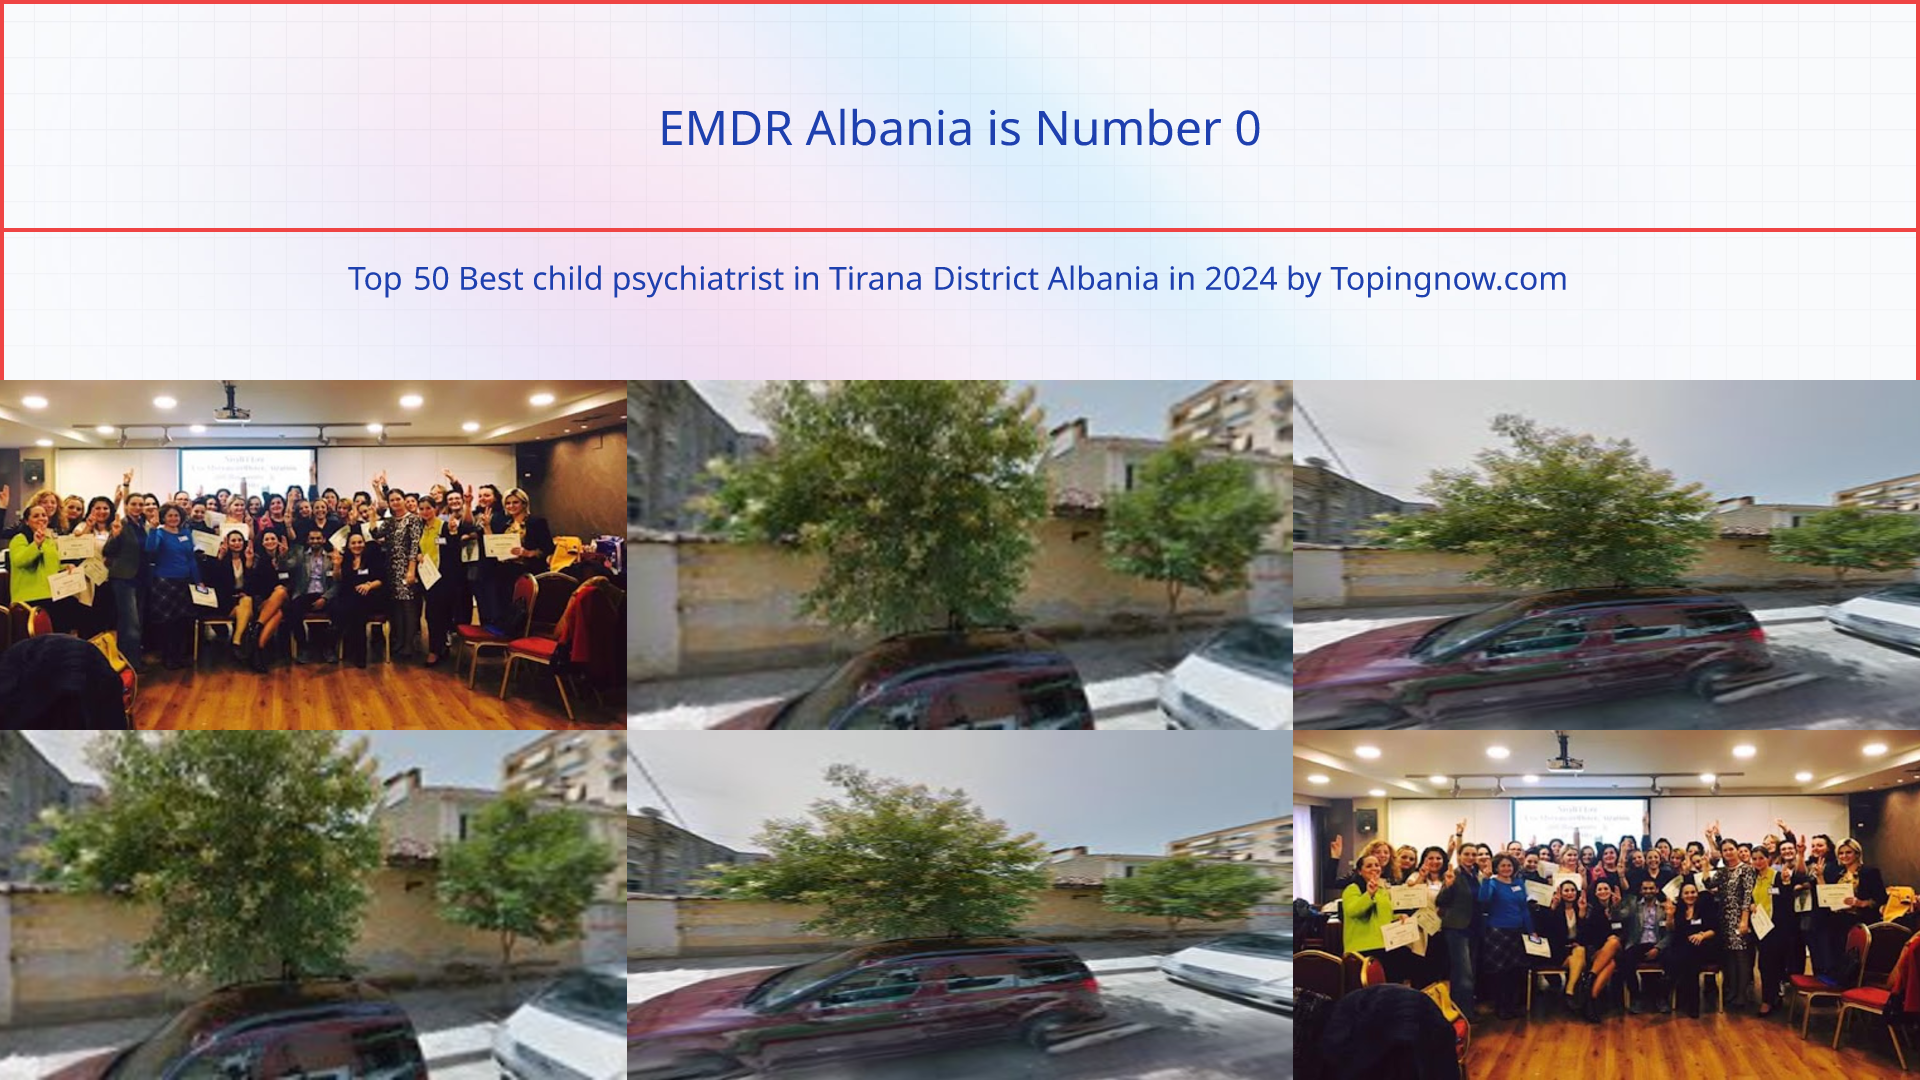 EMDR Albania: Top 50 Best child psychiatrist in Tirana District Albania in 2024